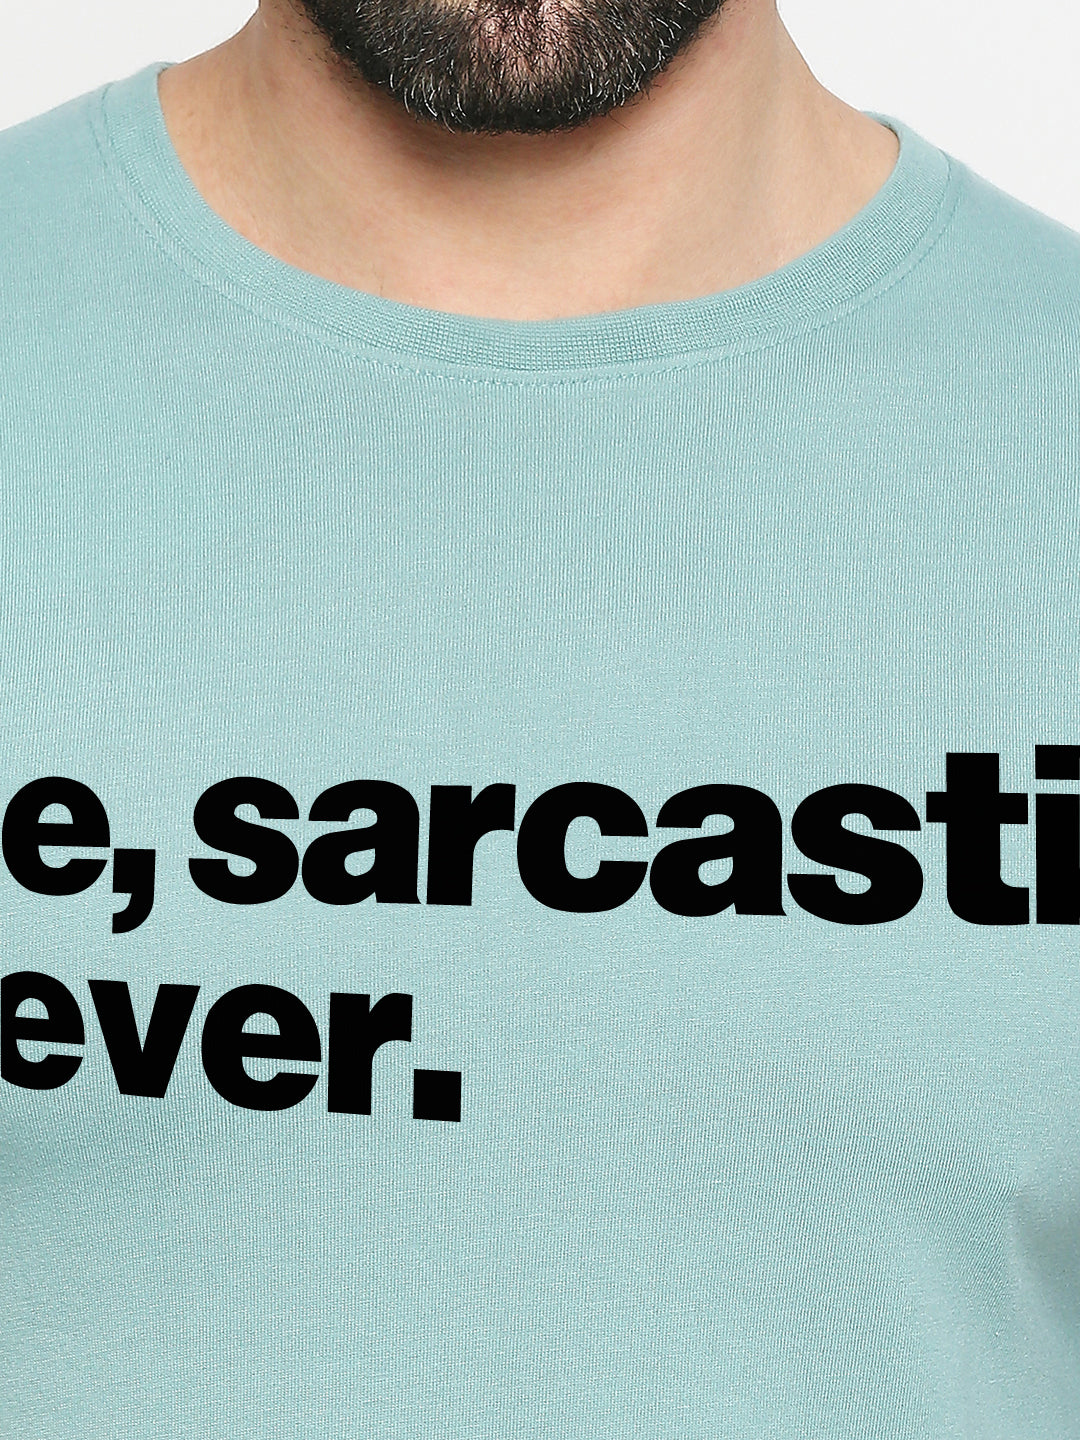 Me, Sarcastic? Never T-Shirt